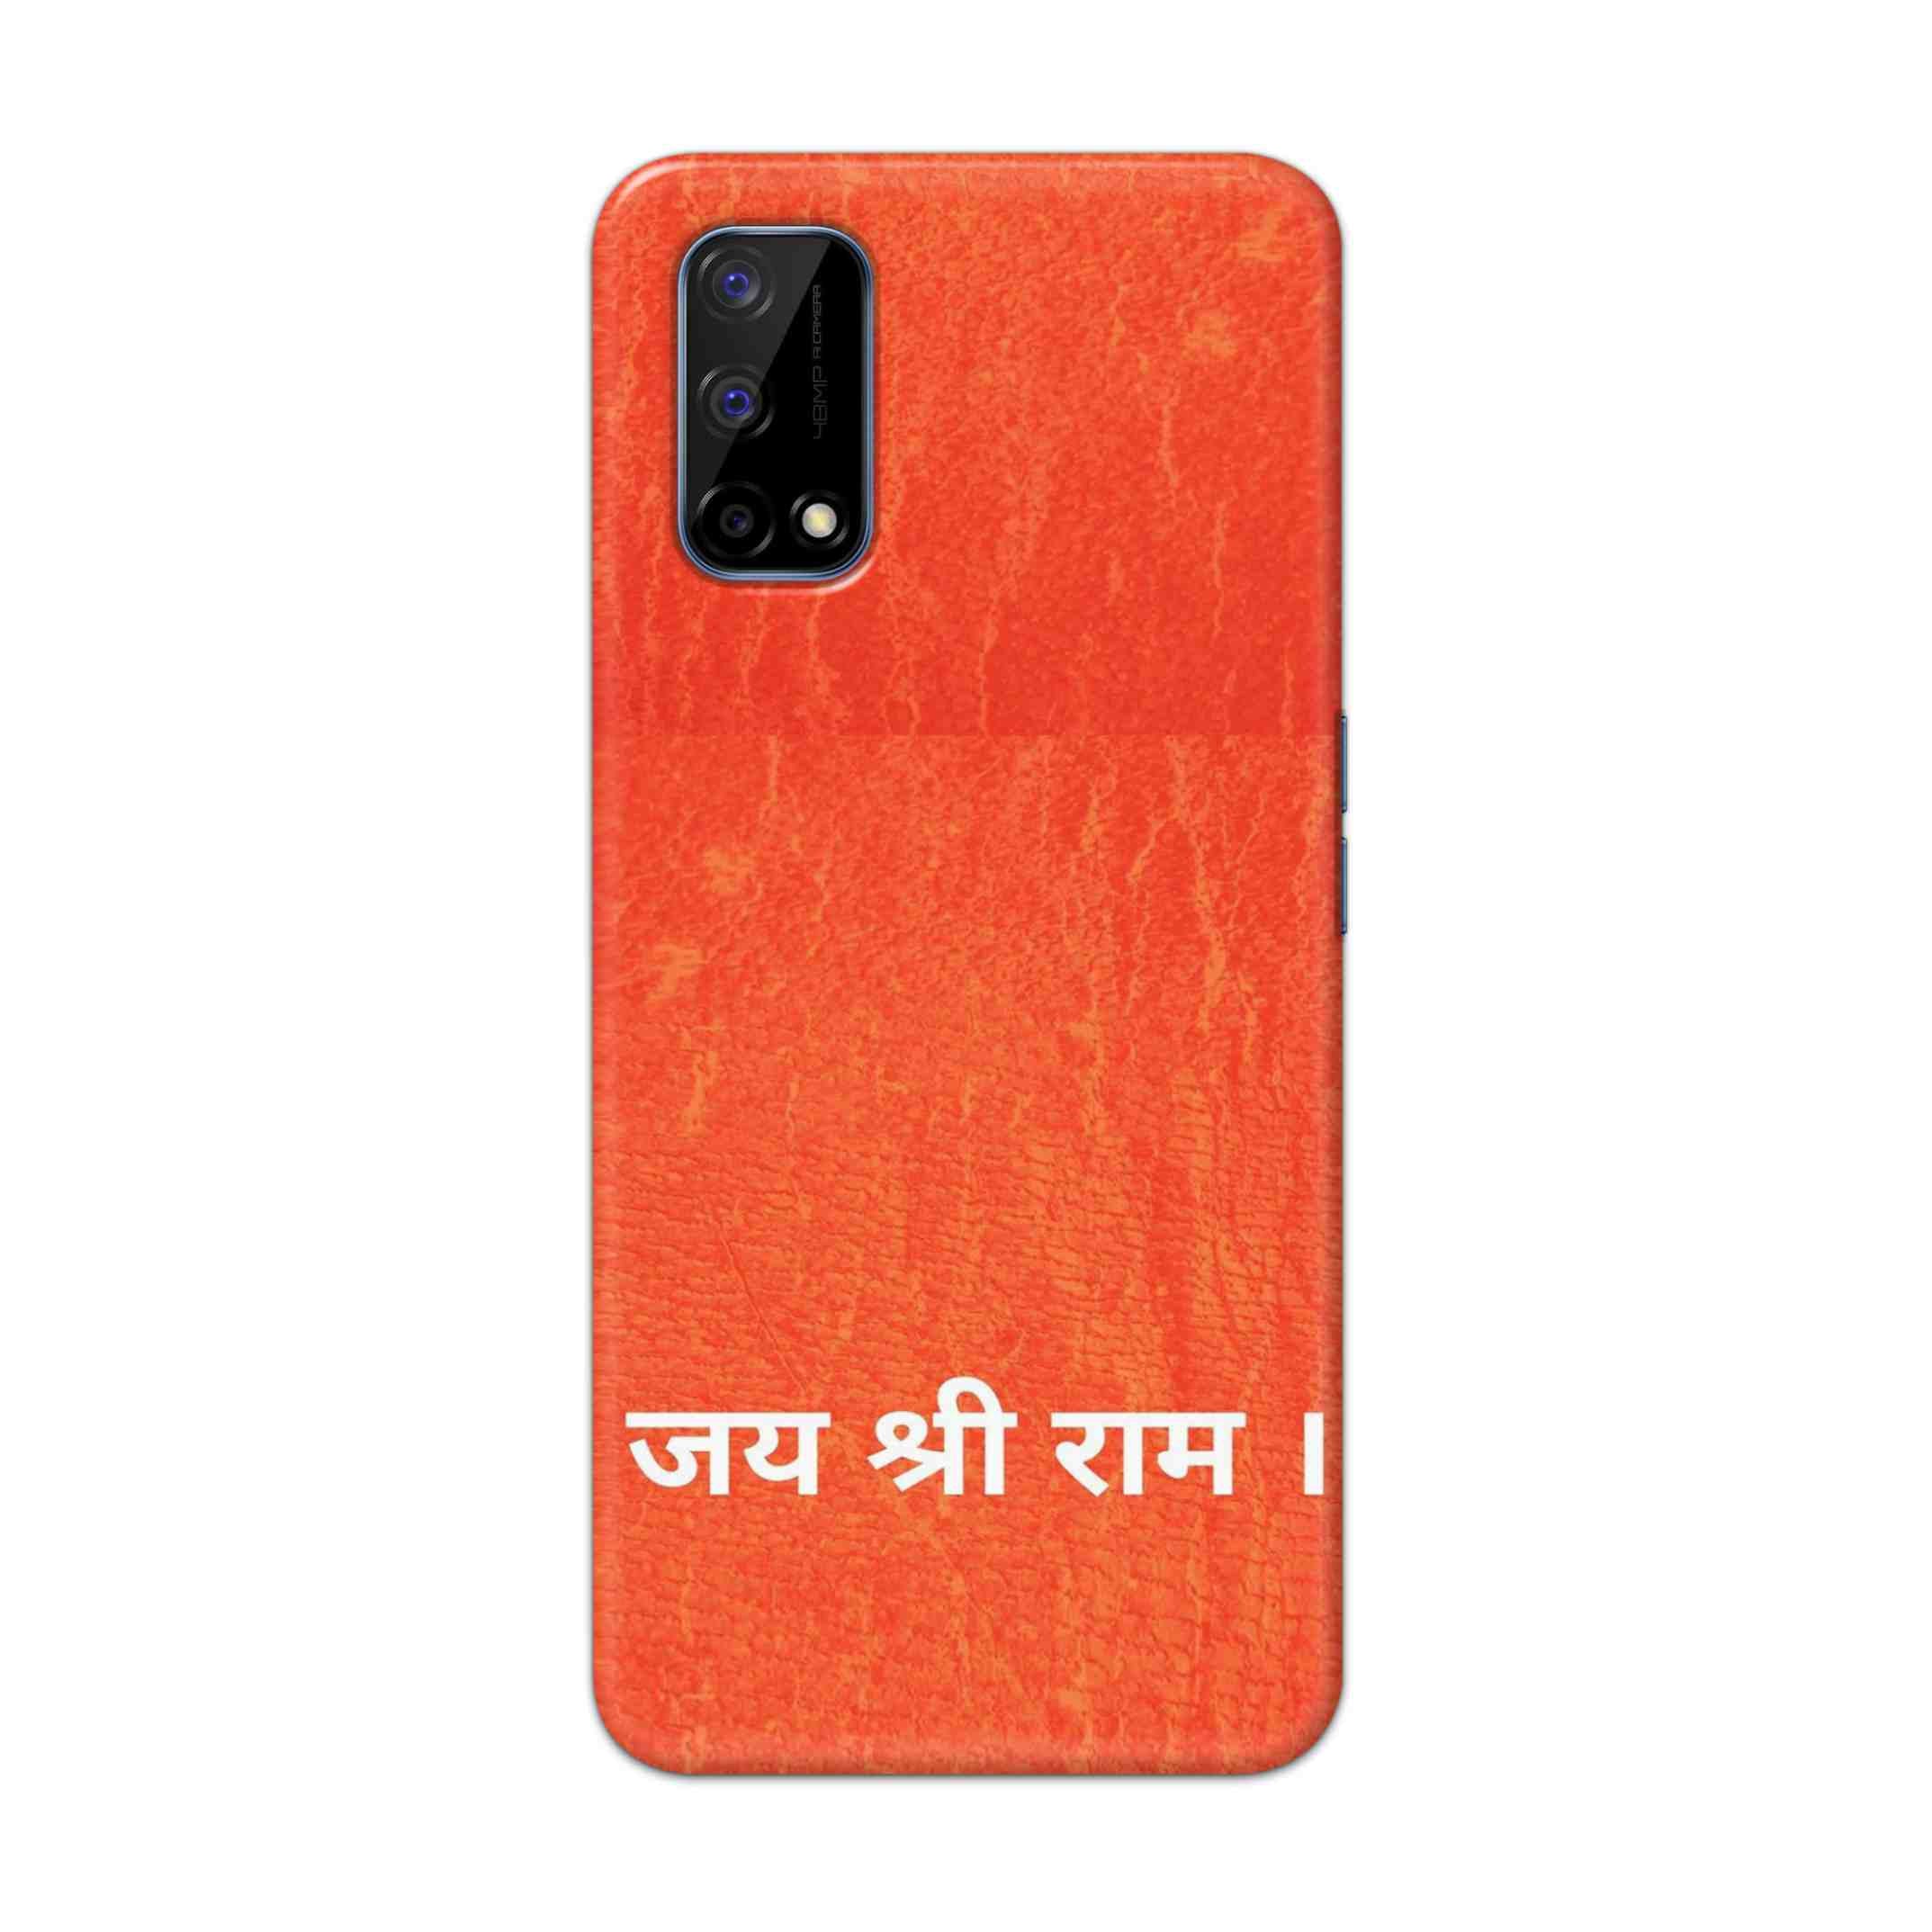 Buy Jai Shree Ram Hard Back Mobile Phone Case Cover For Realme Narzo 30 Pro Online